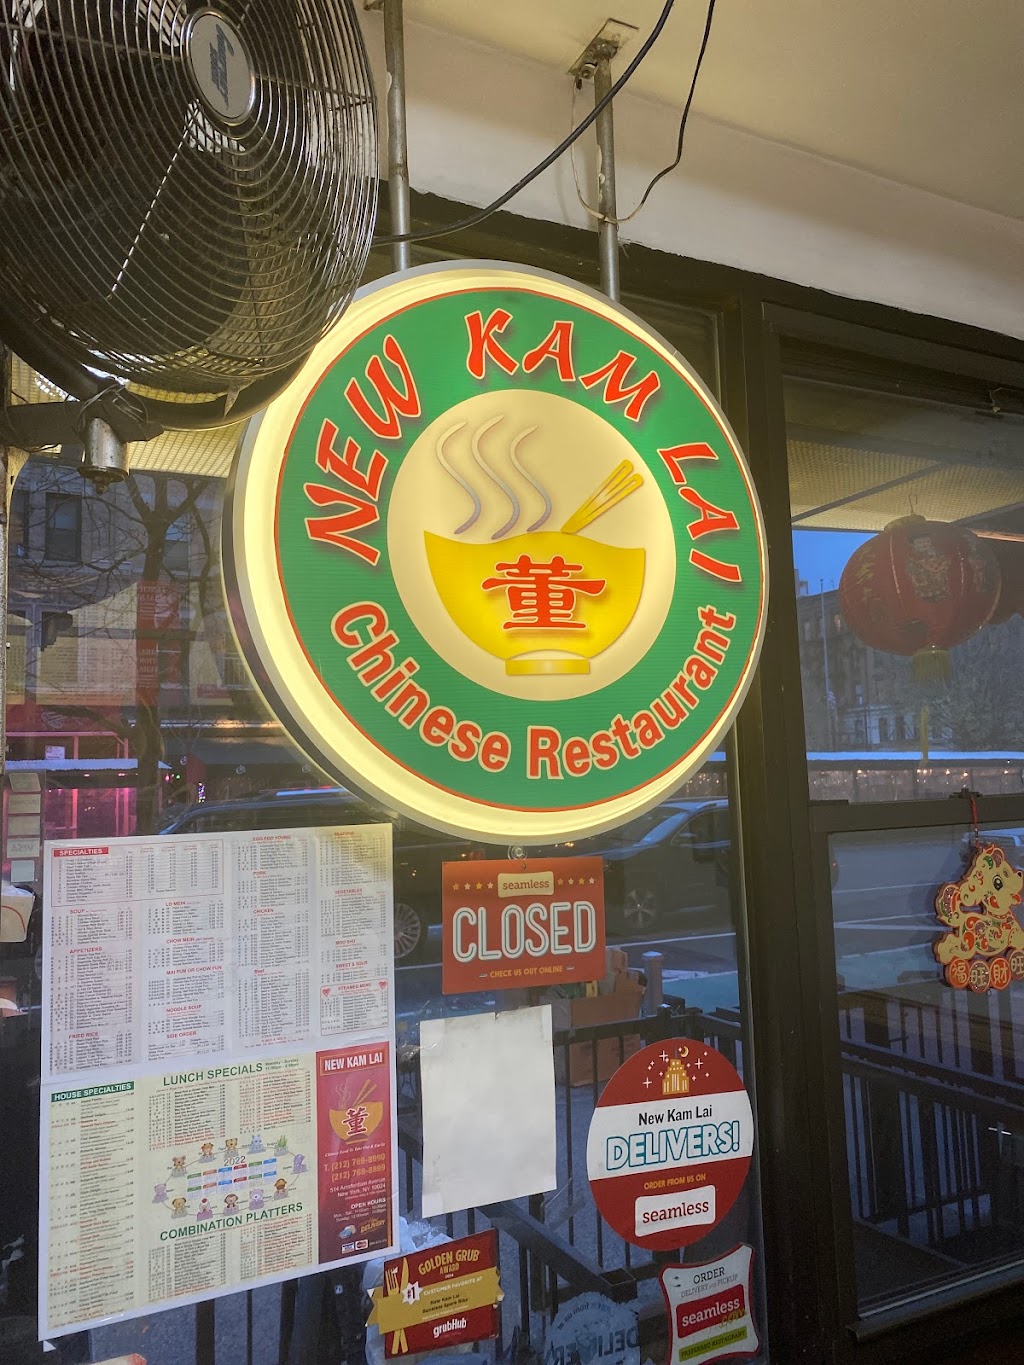 New Kam Lai Chinese Restaurant | 514 Amsterdam Ave, New York, NY 10024, USA | Phone: (212) 769-8990